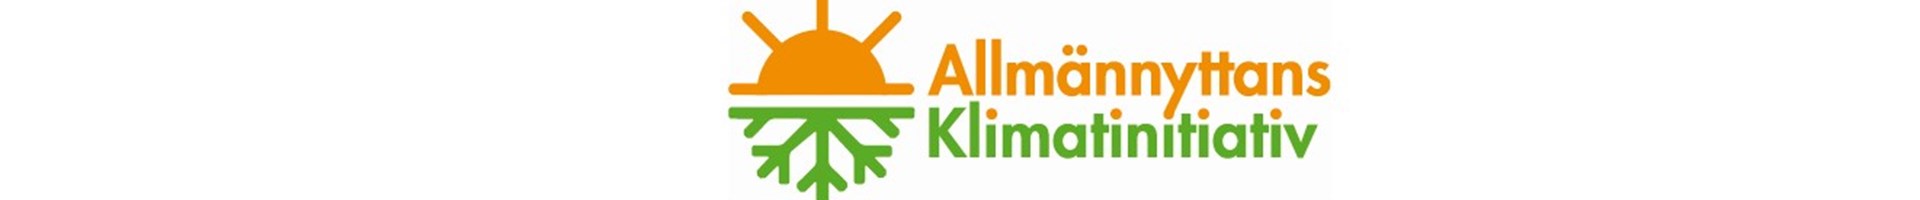 Banner Allmännyttans Klimat